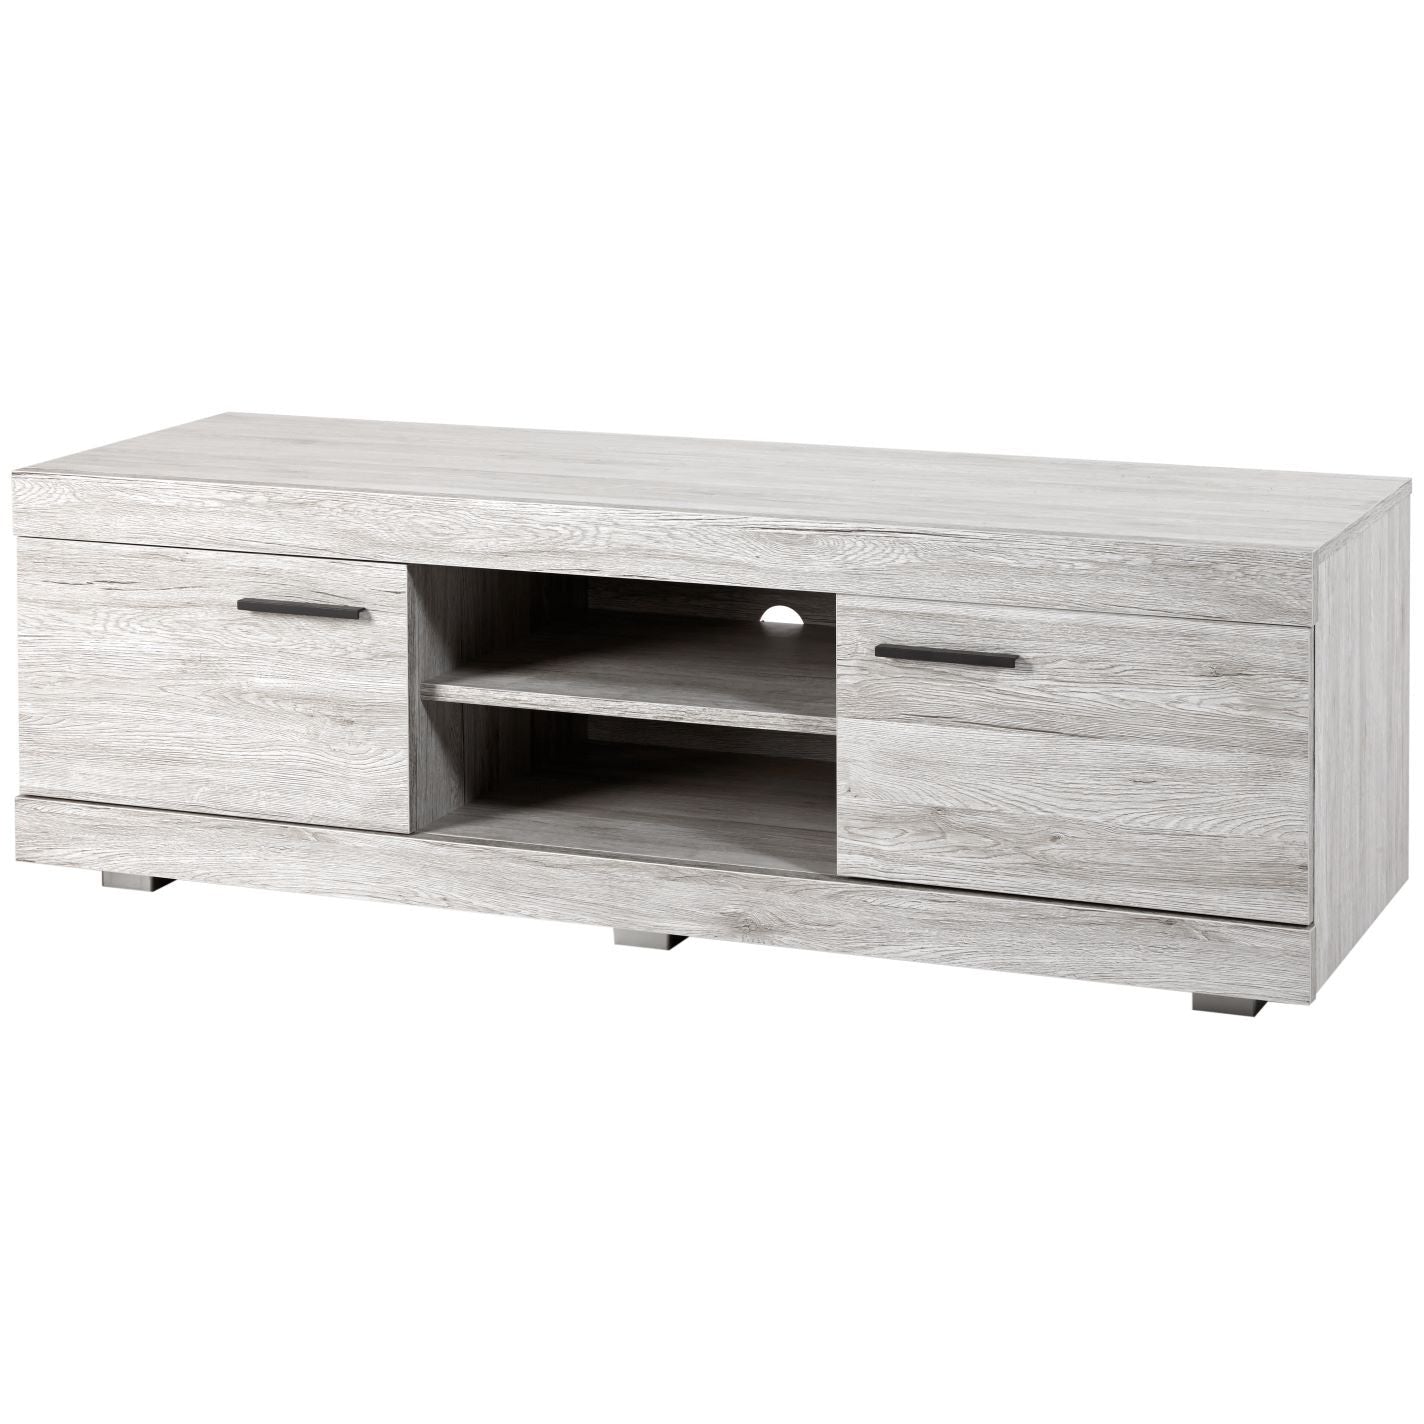 TV cabinet | Furniture series Thoma | light gray, natural | 150x